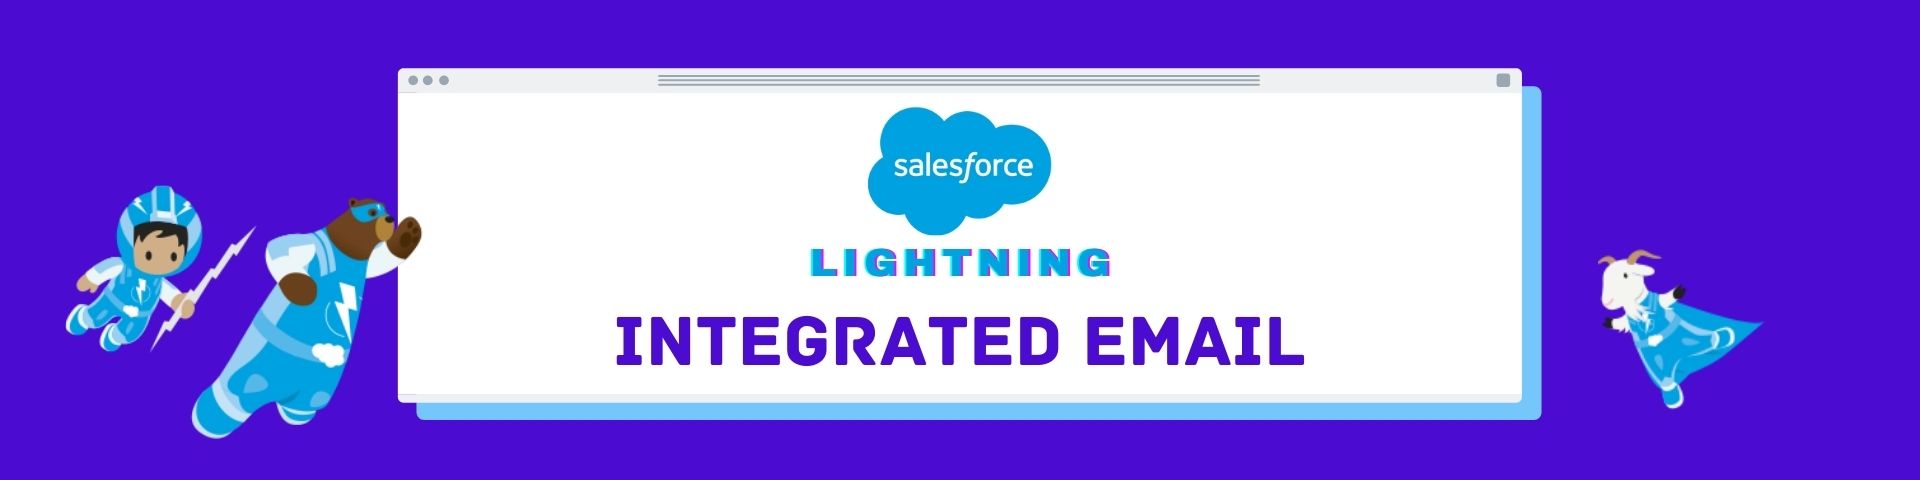 Salesforce Lightning Integrated email